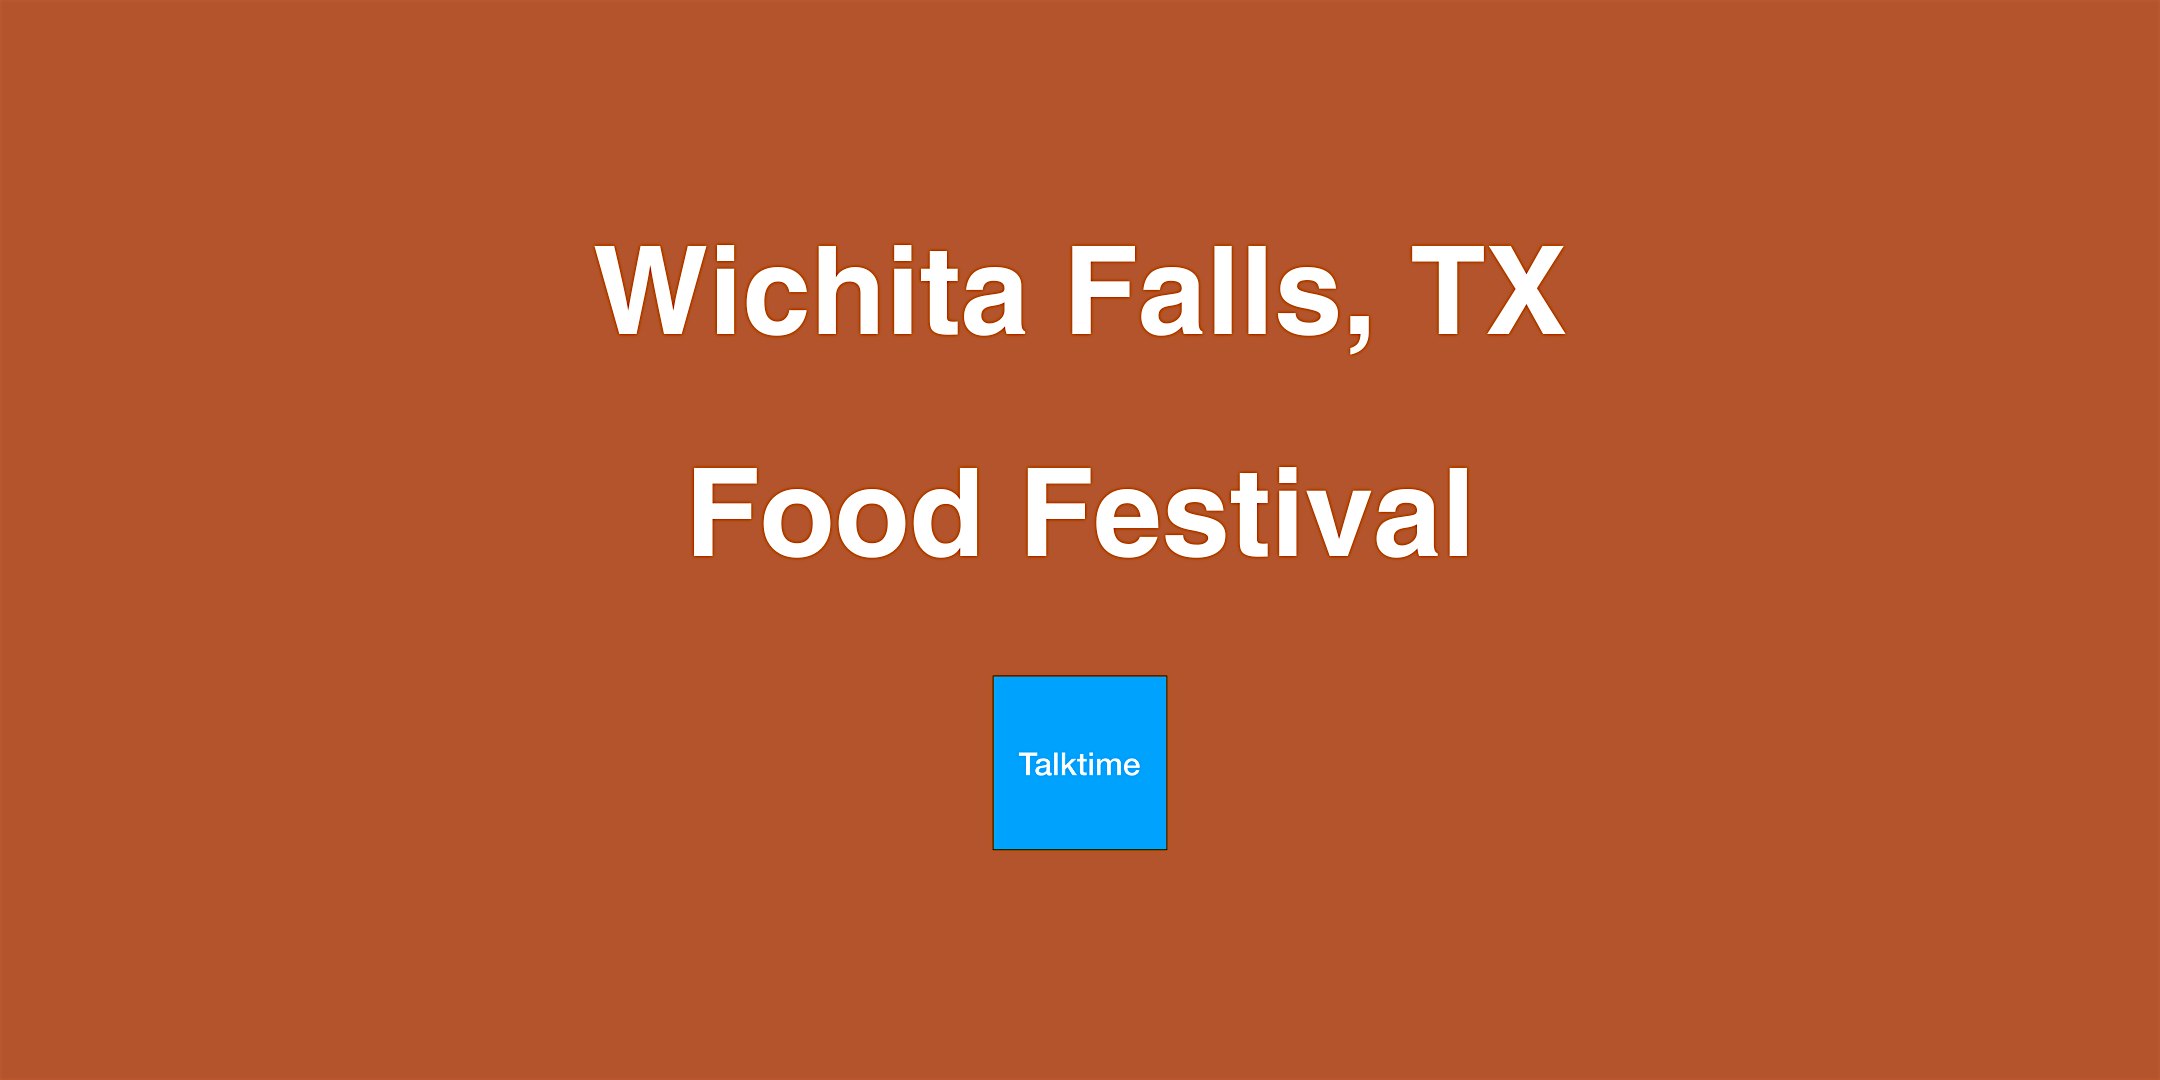 Food Festival - Wichita Falls